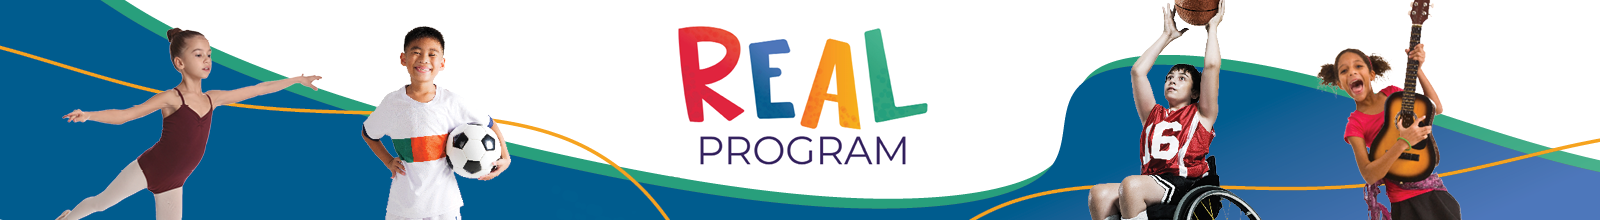 REAL Program logo and kids doing recreation activities